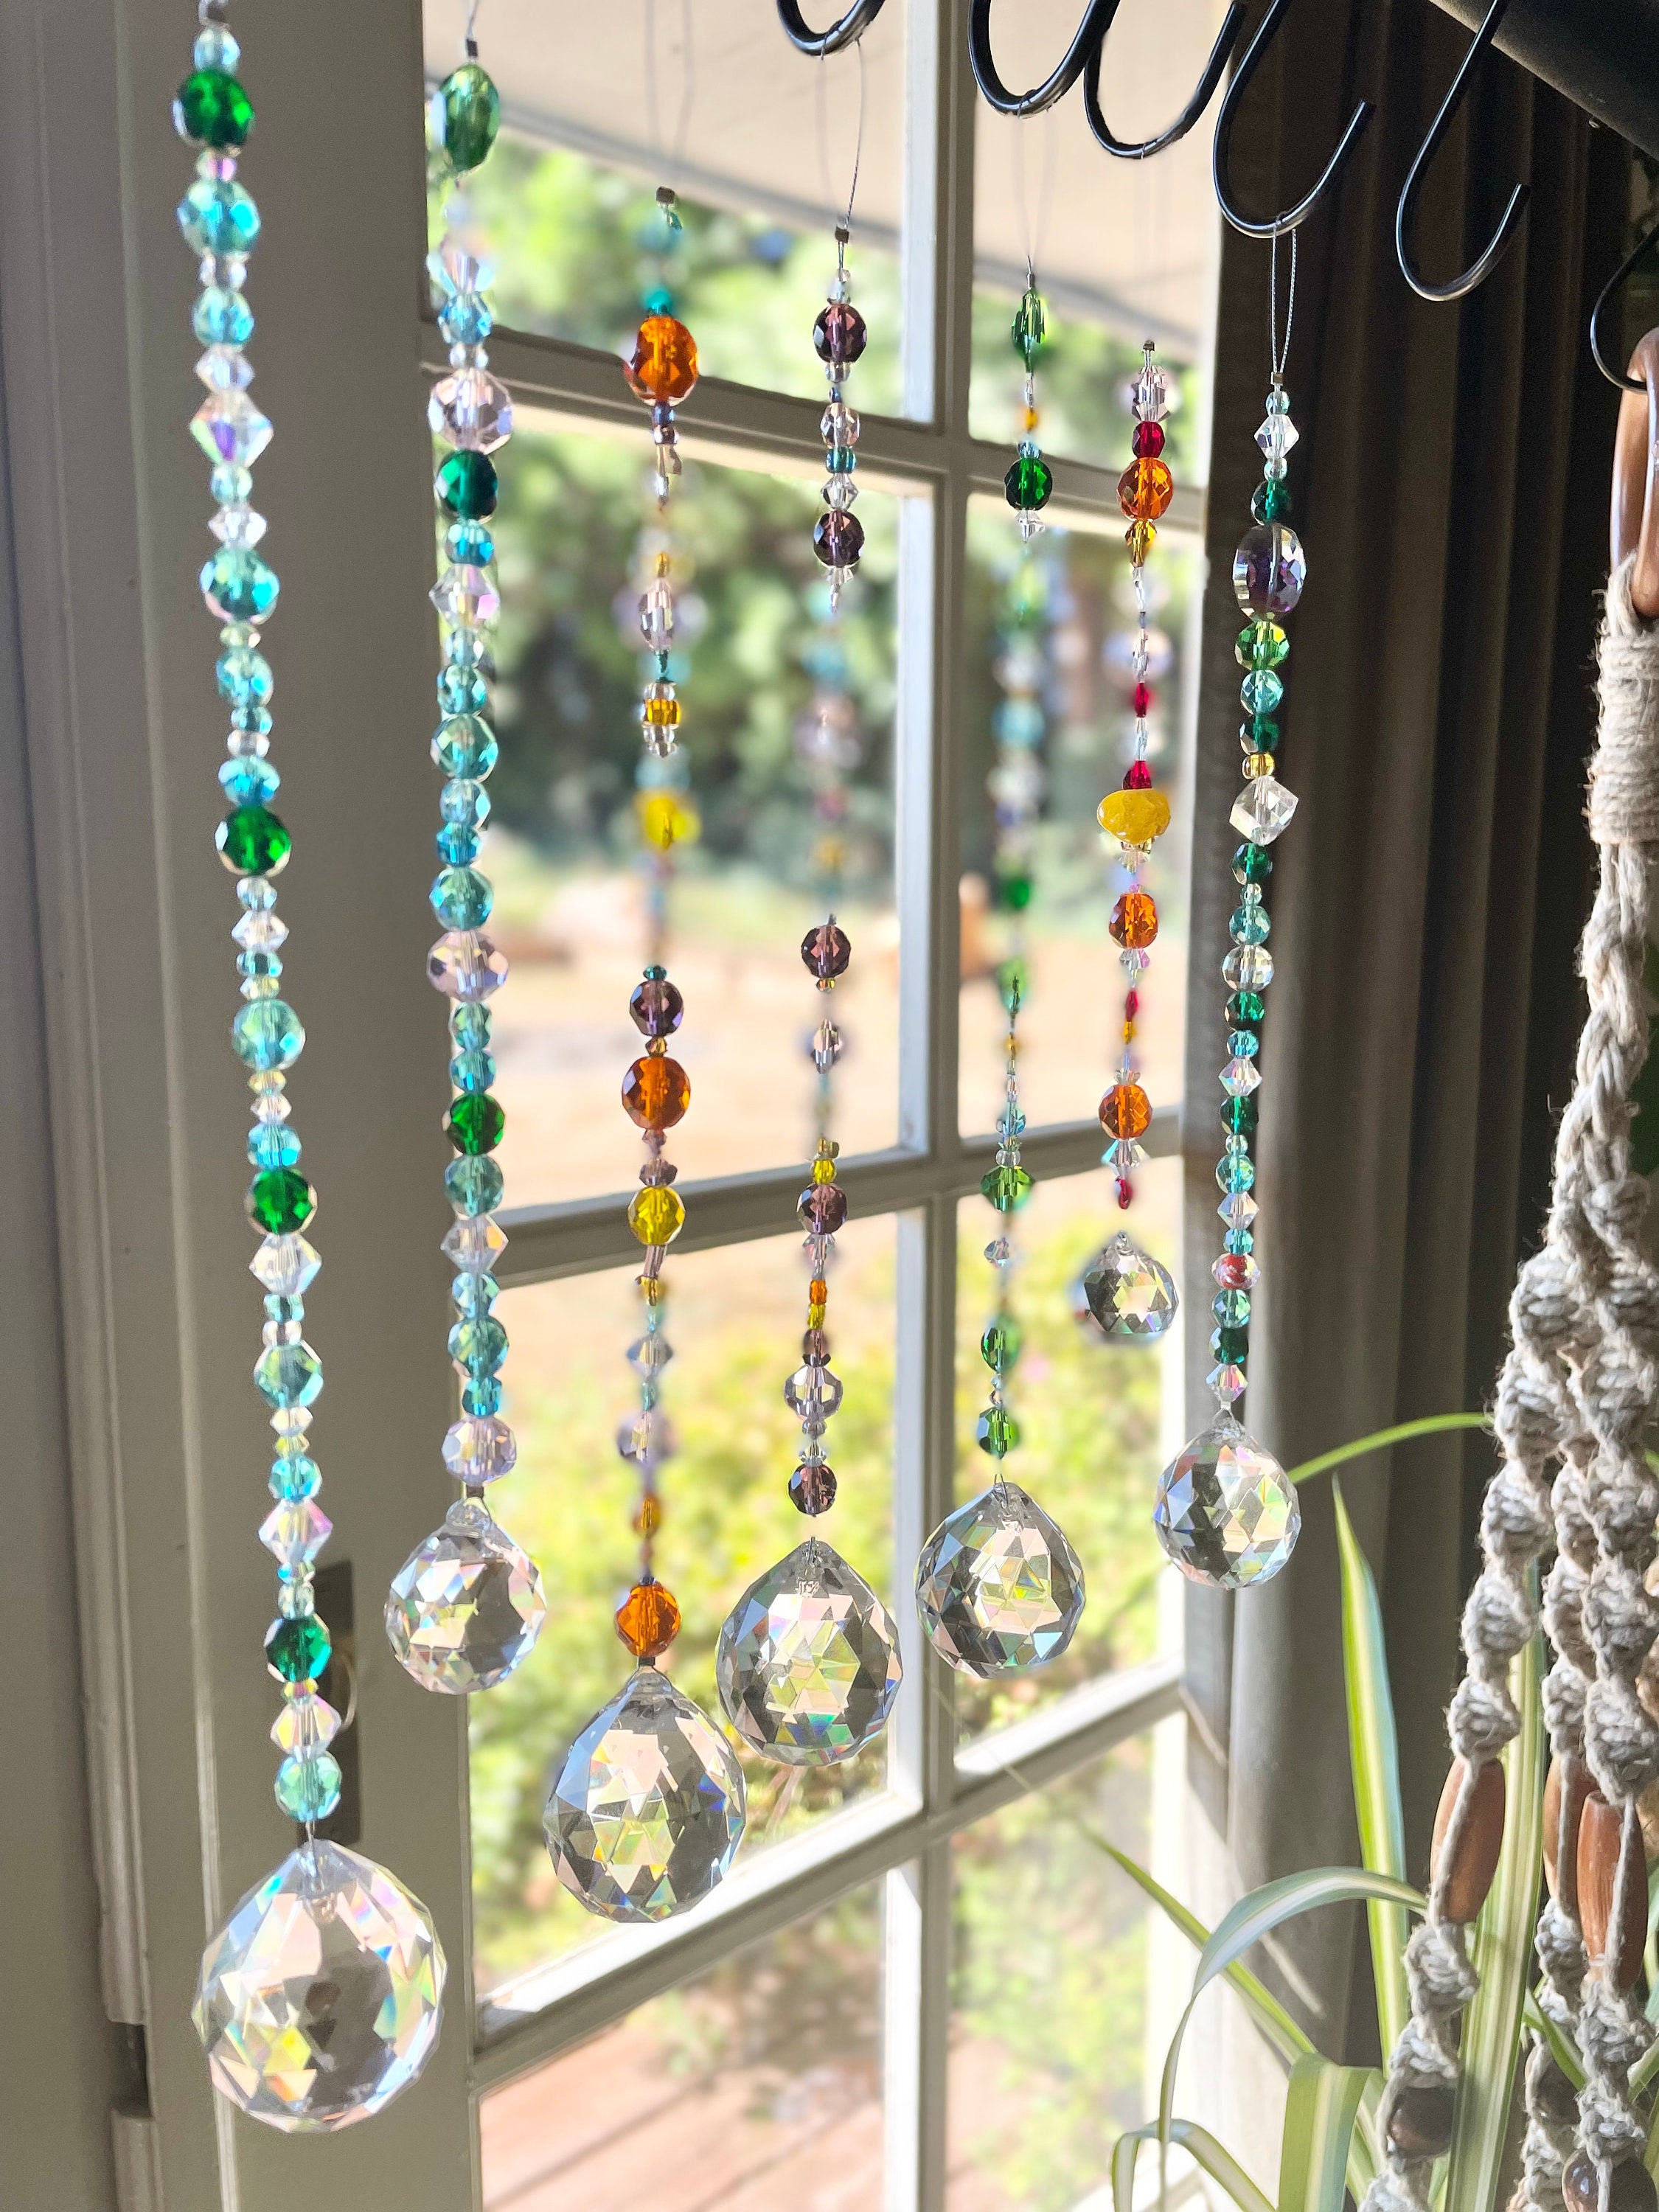 Cars Hanging Suncatchers Beads Chain Sphere Chandelier Lamps Light Pendant for Christmas Day Plants Wedding Window Décor BKpearl 7 Pcs Crystals Sun Catcher 